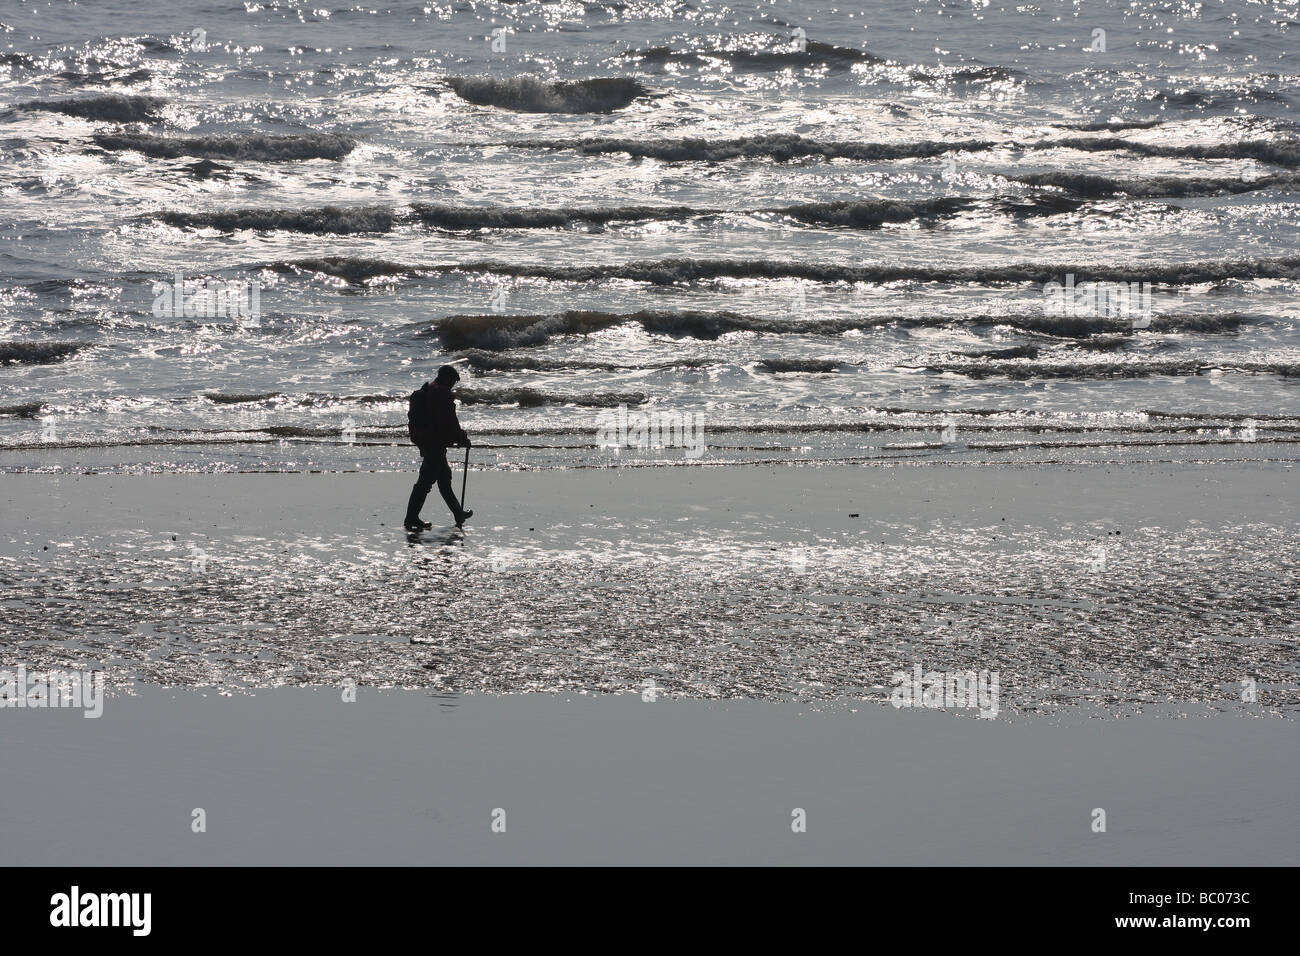 Man walking on wet beach in silhouette. Stock Photo